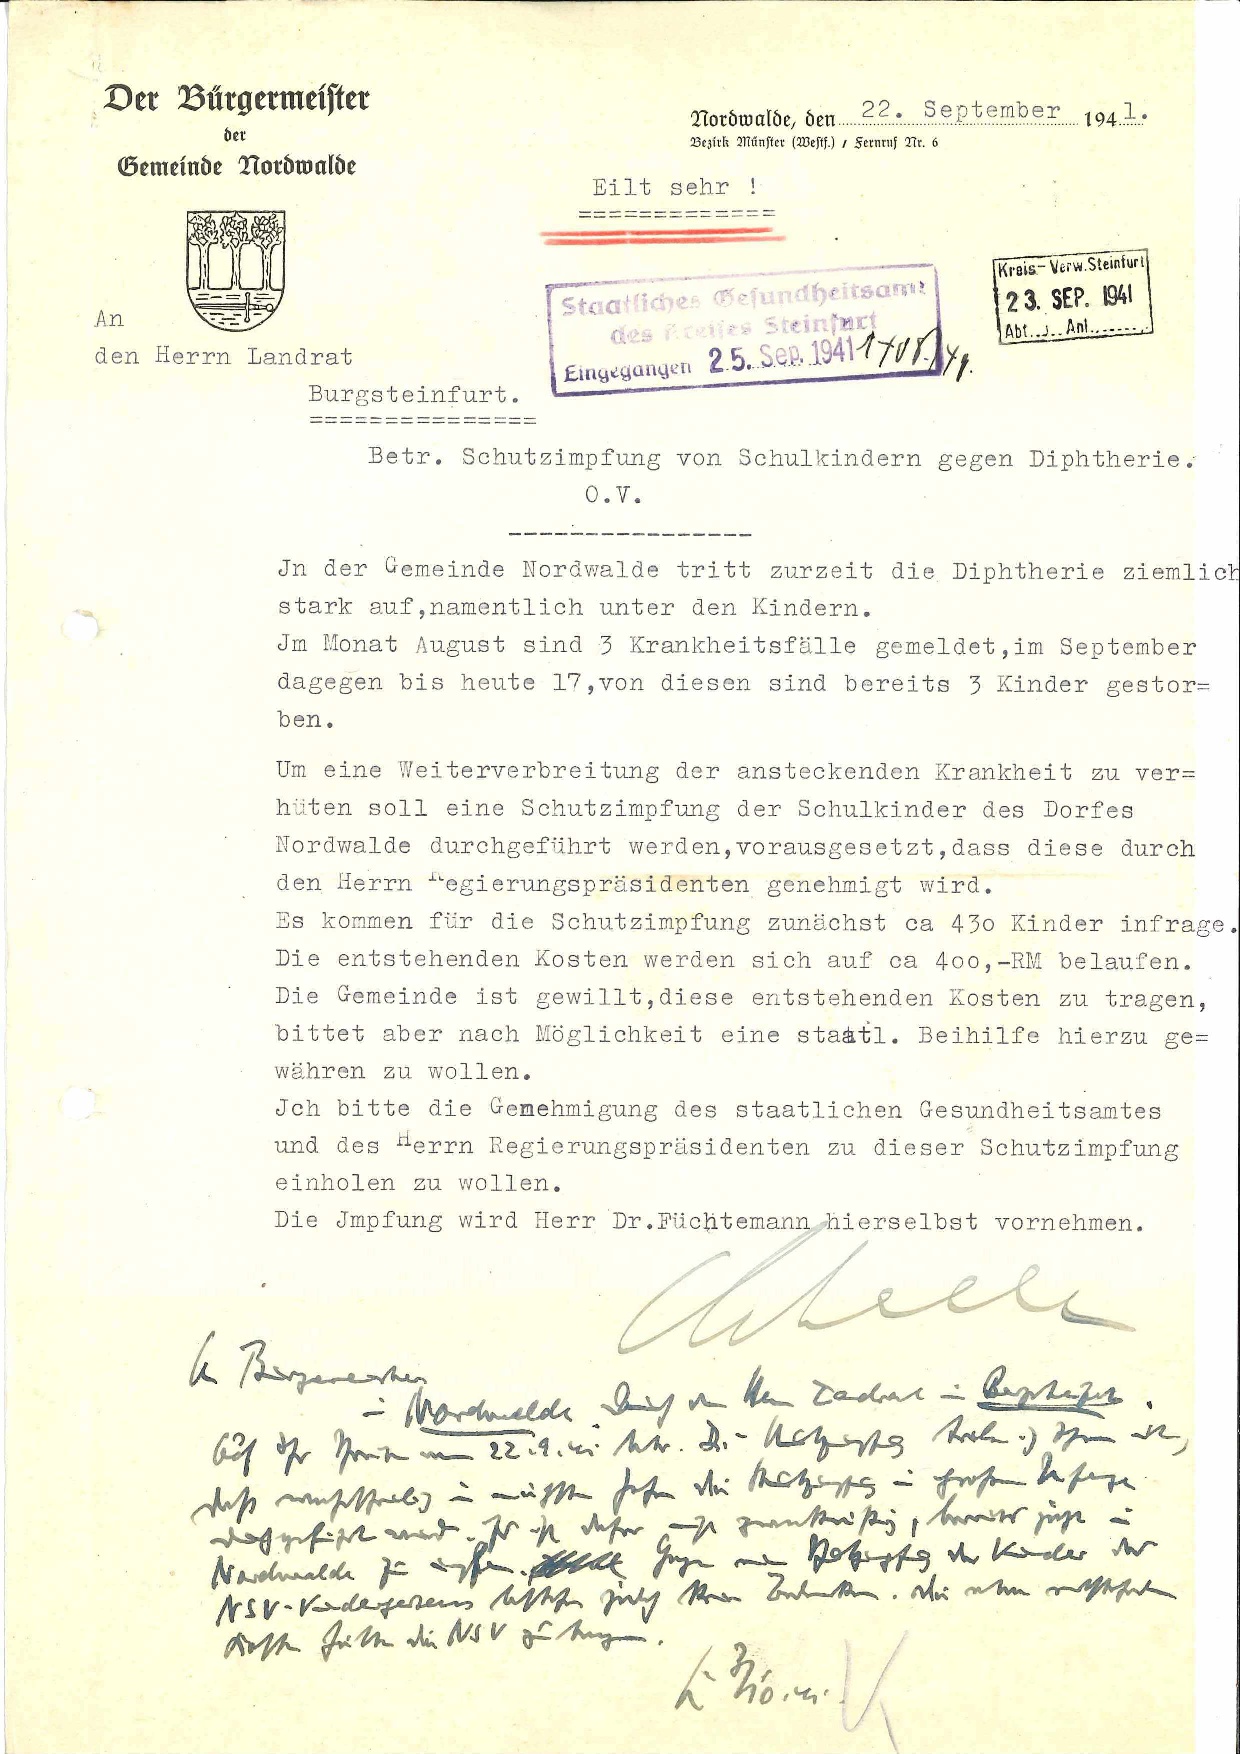 Plan des Bürgermeisters Nordwalde zu Schulimpfungen gegen Diphtherie (1941)